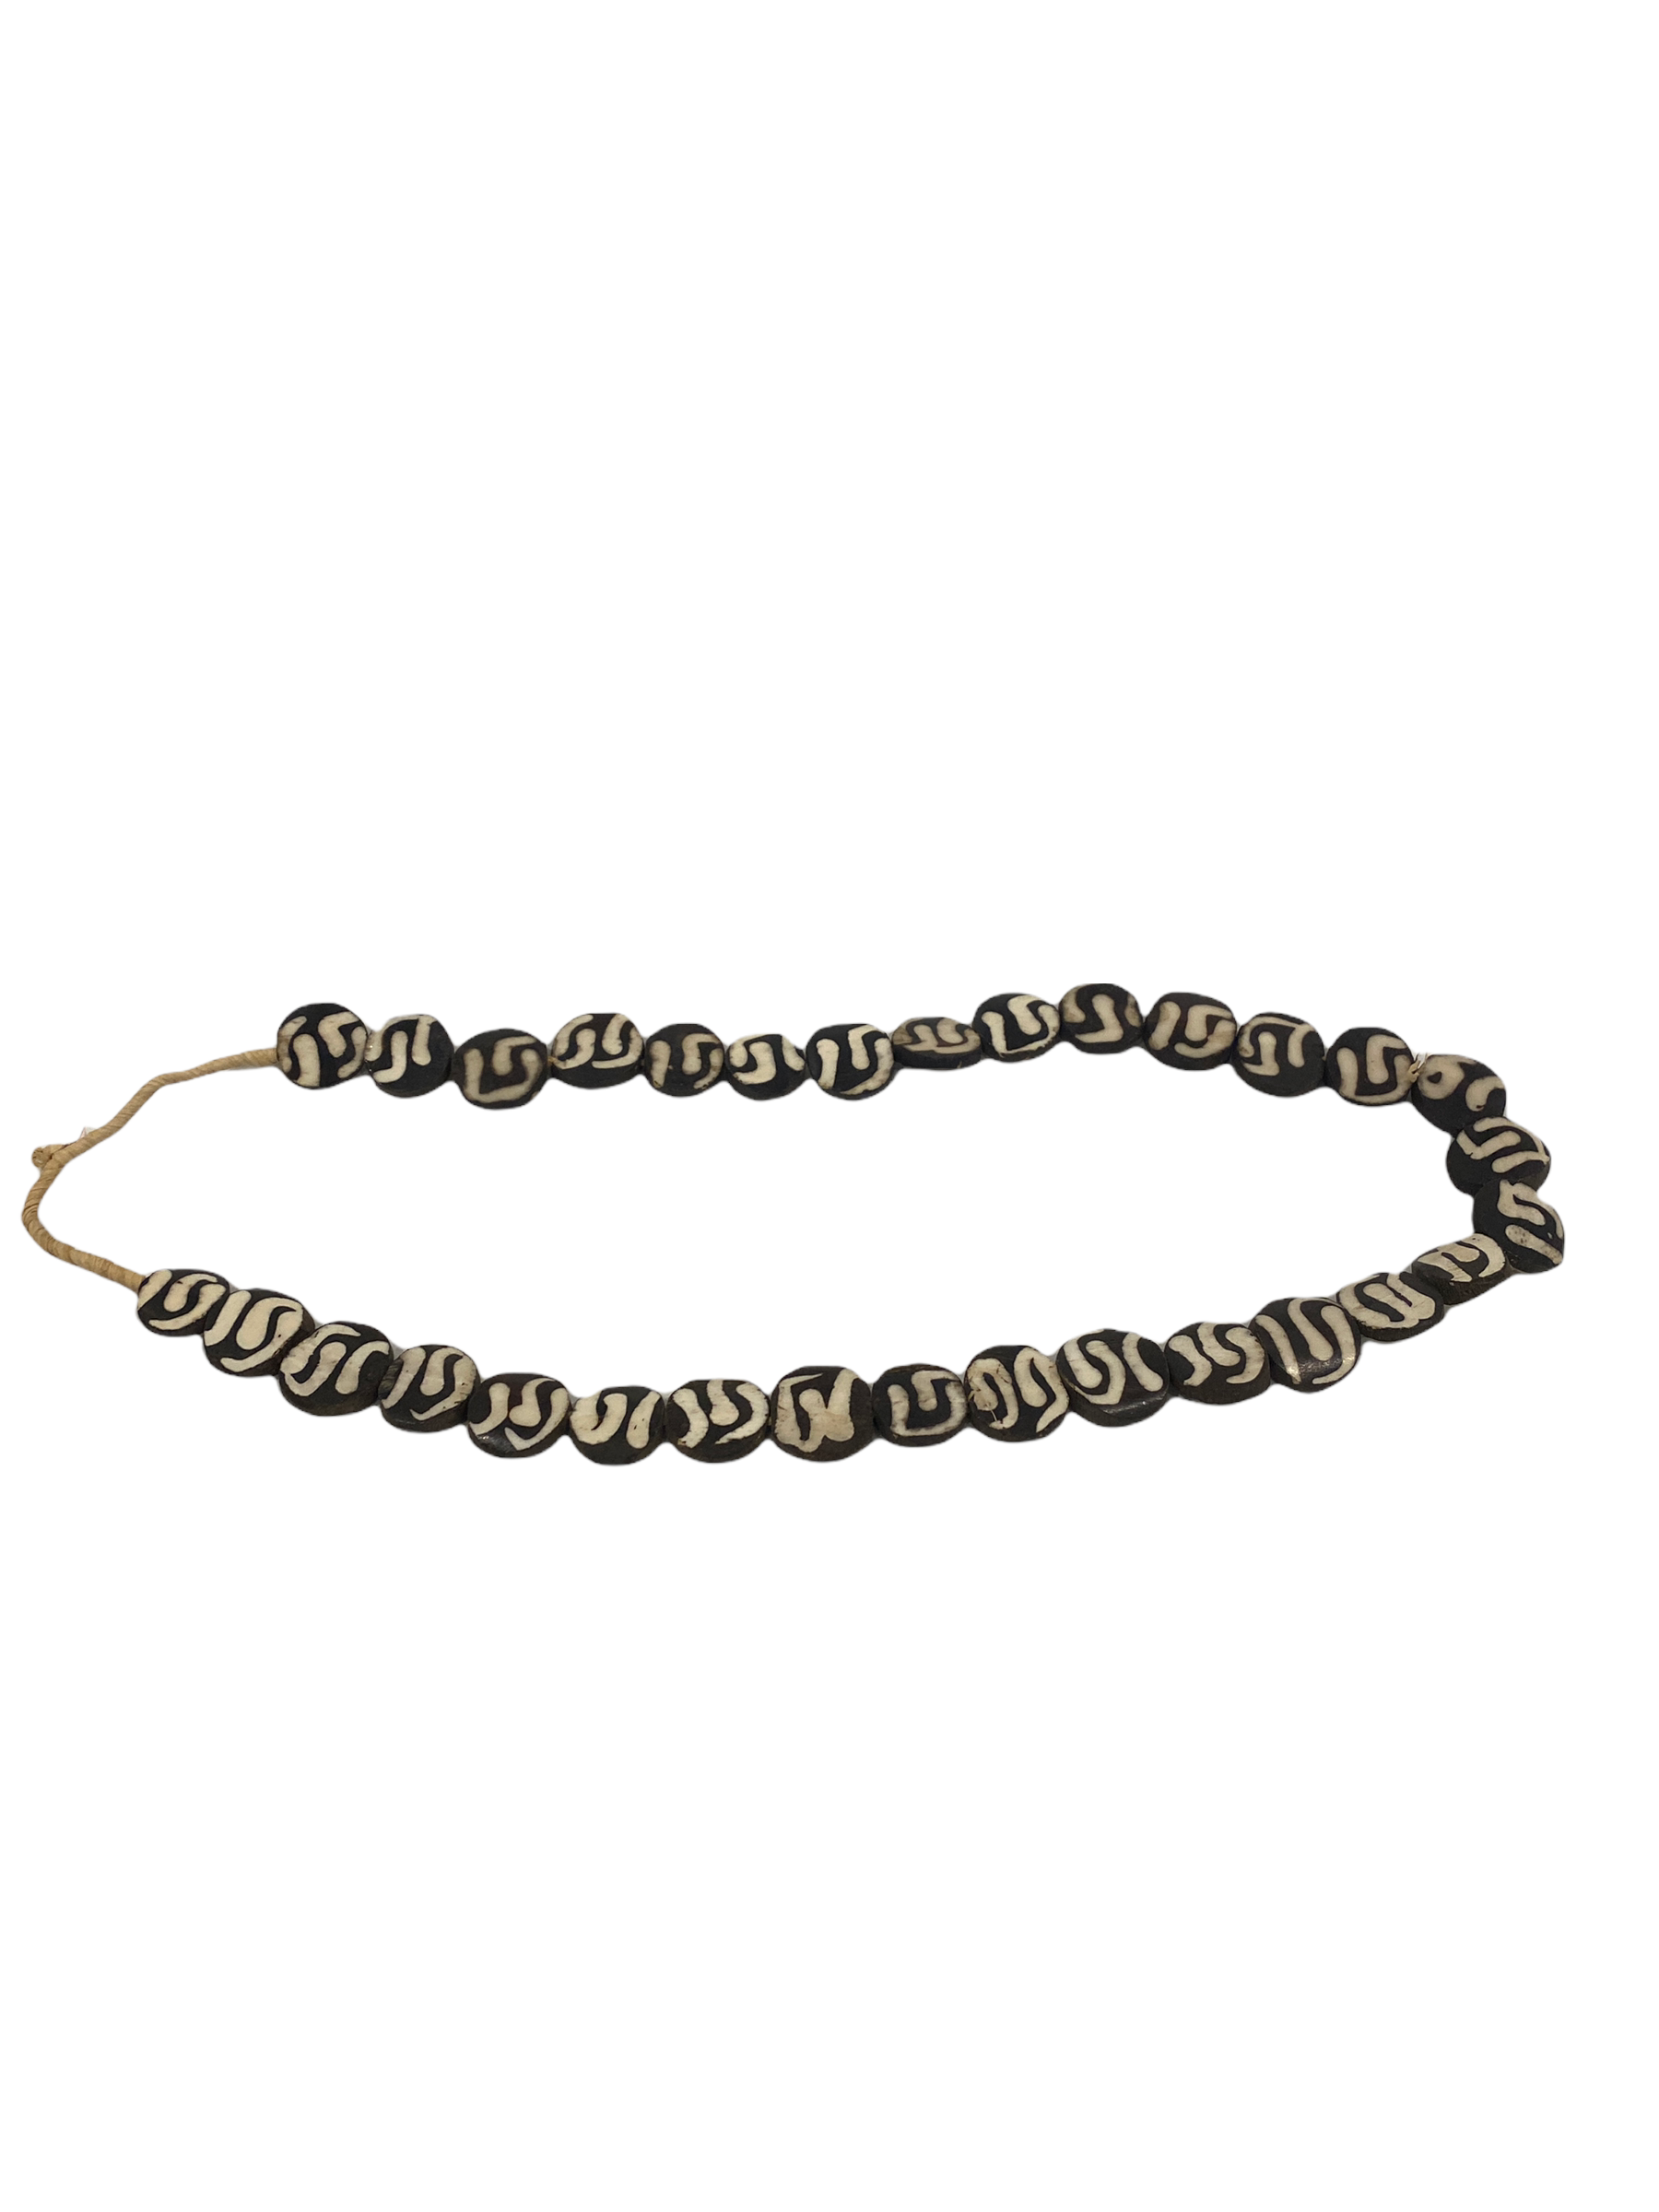 Kenya Beads Necklace - Disc beaded black/white (47.4)